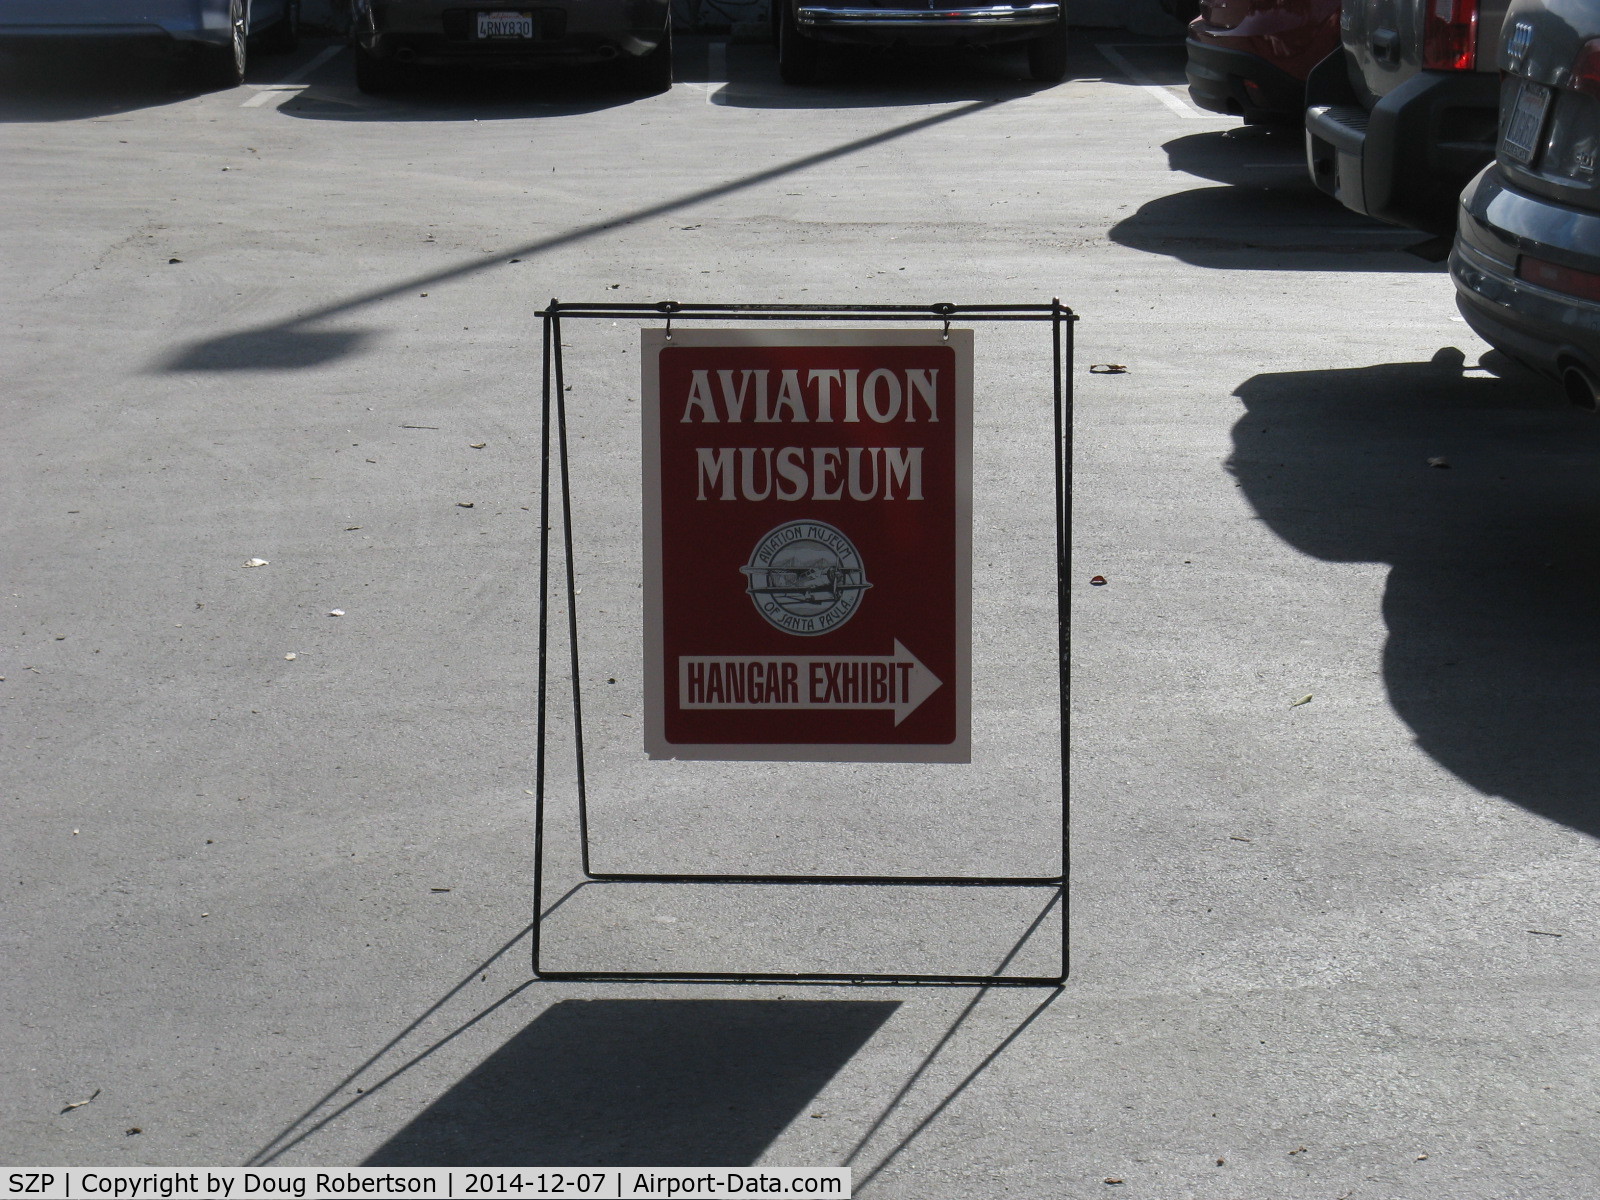 Santa Paula Airport (SZP) - Aviation Museum directional sign. Open First Sundays 10-3, rain cancels